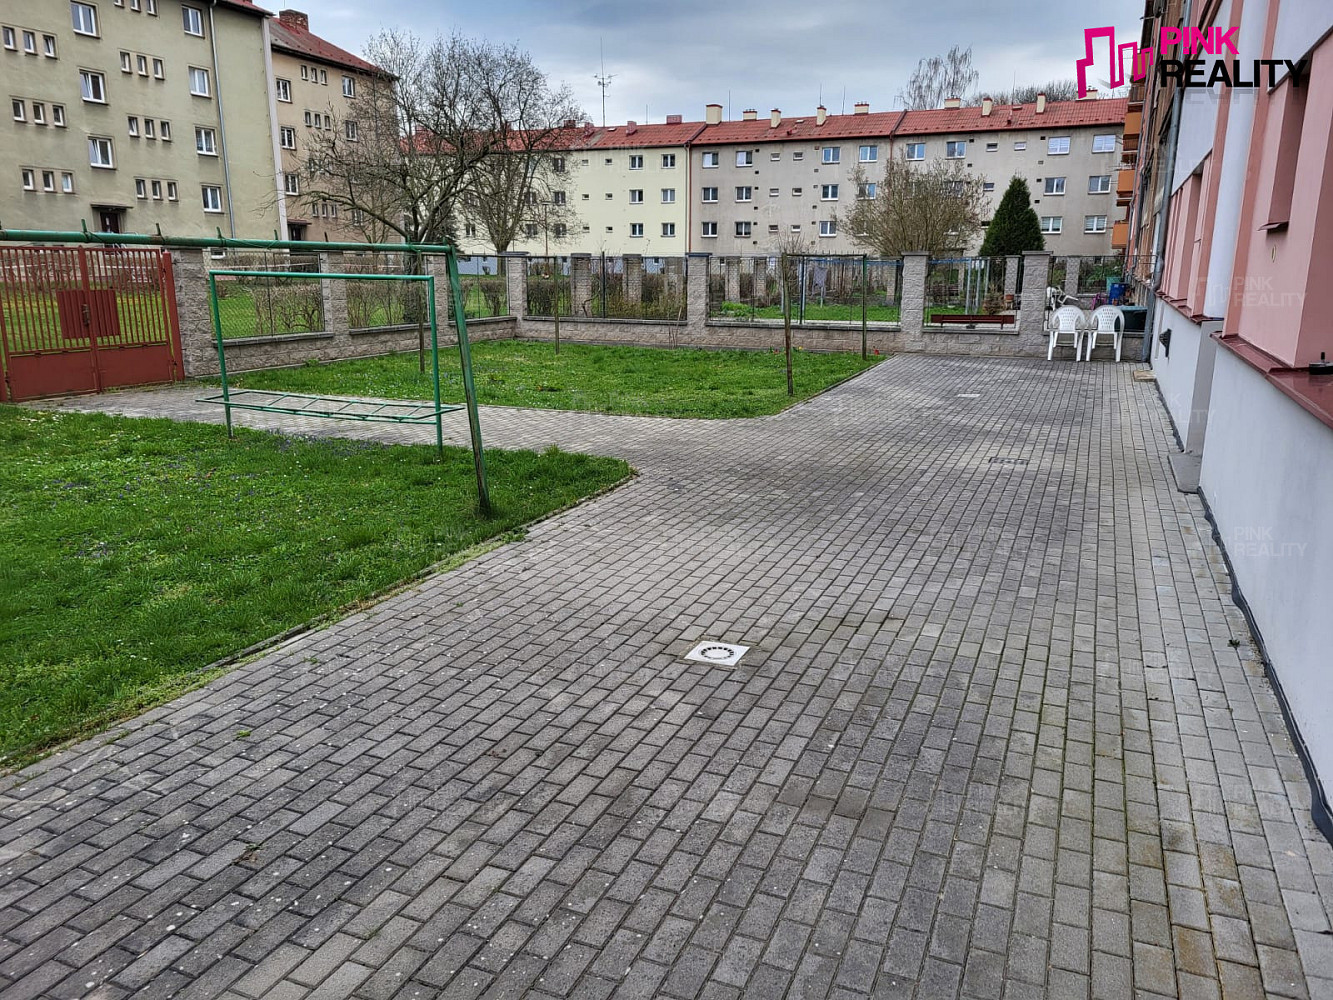 Bidlova, Hradec Králové